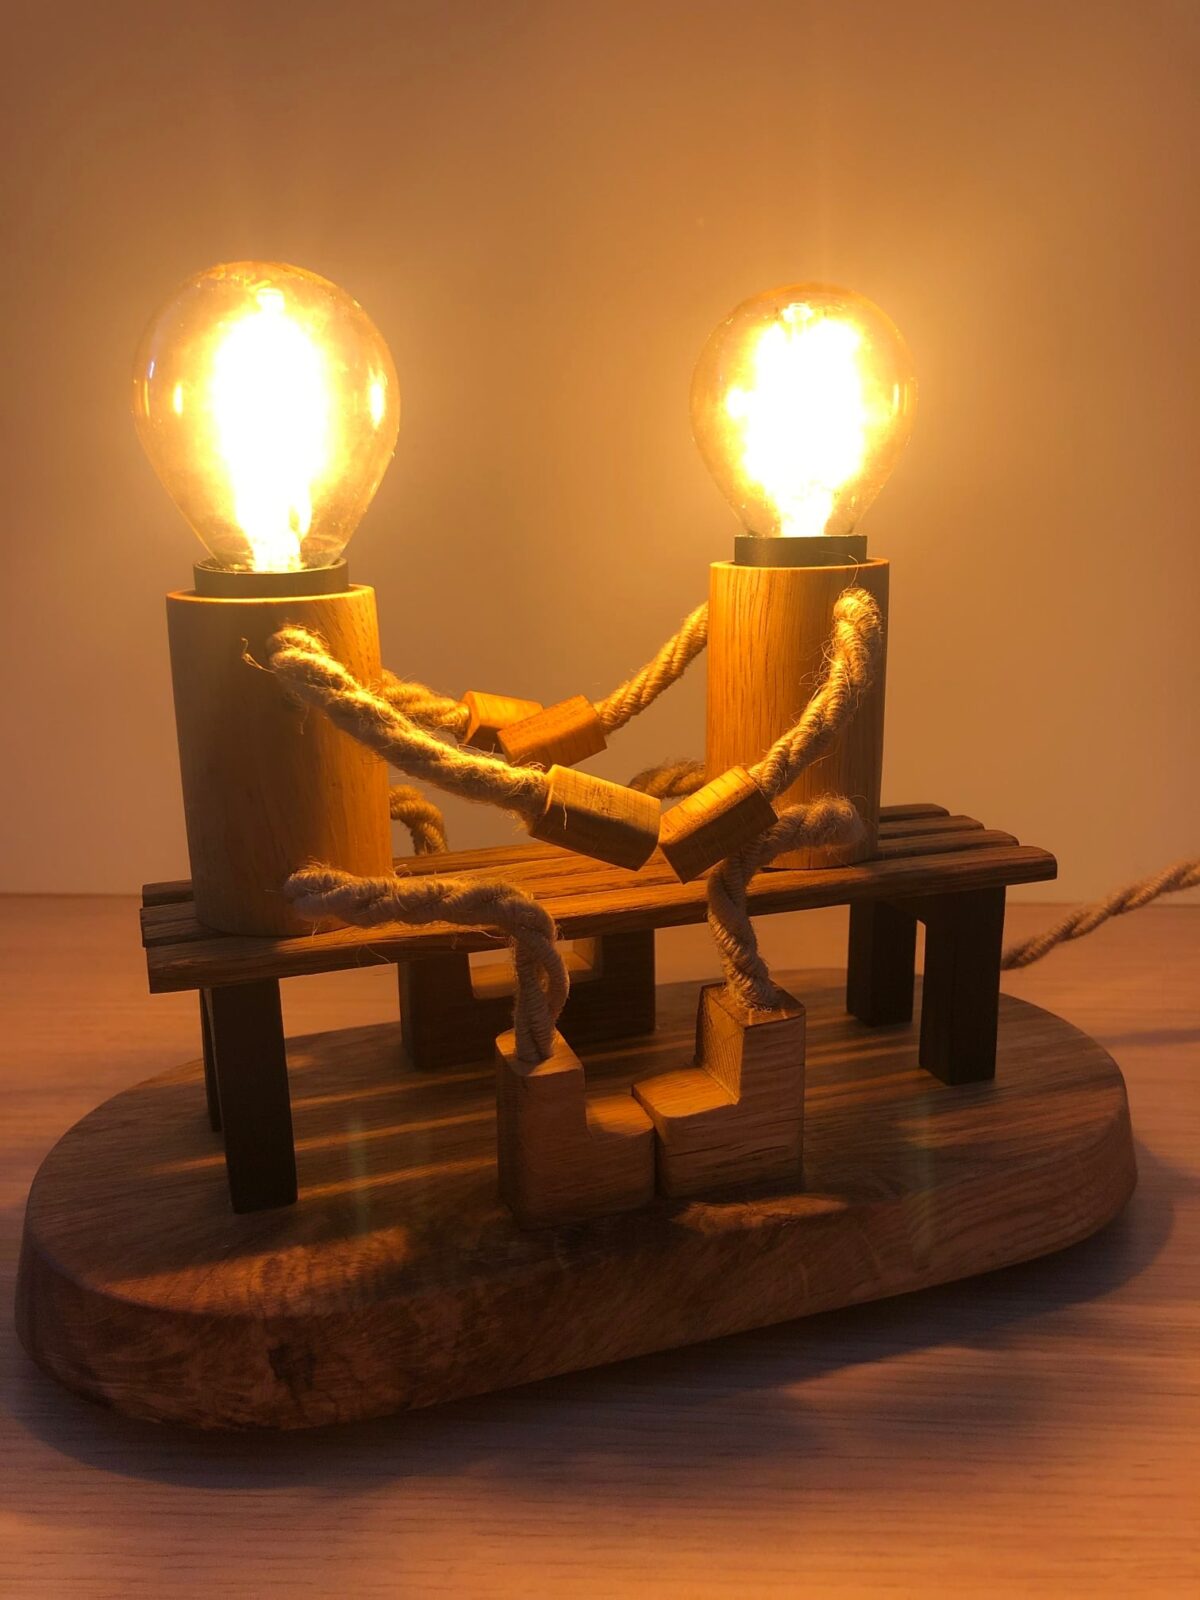 Creative Lamps Of Light Bulb Head Figures By Ivan Cvitkovic 19 1